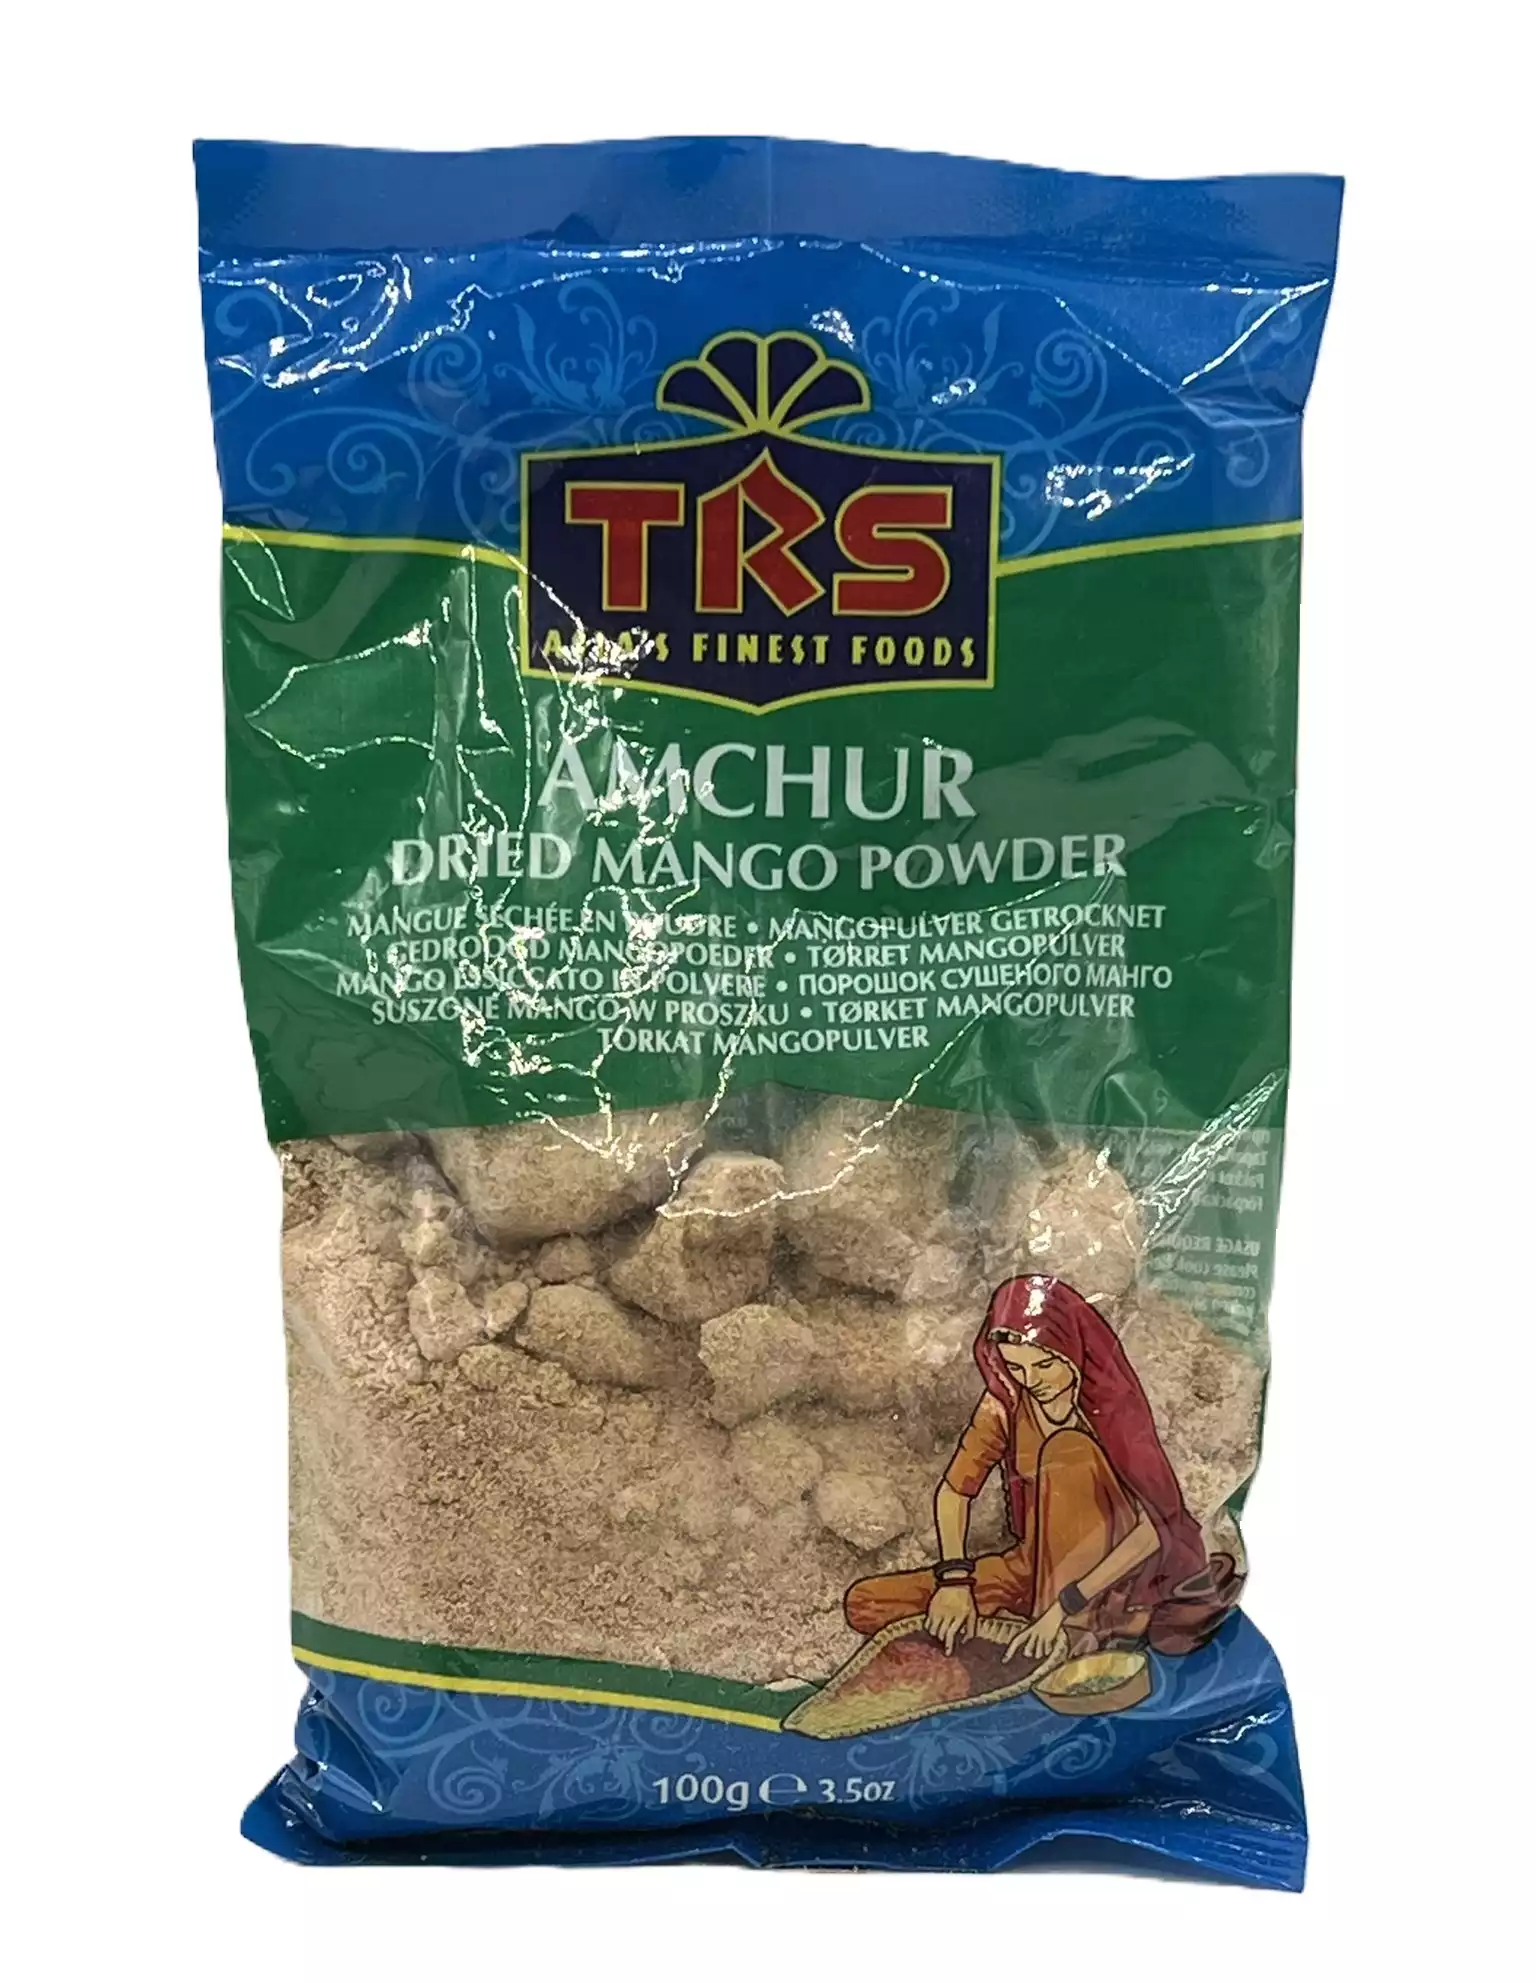 amchur dried mango powder-trs asia's finest food